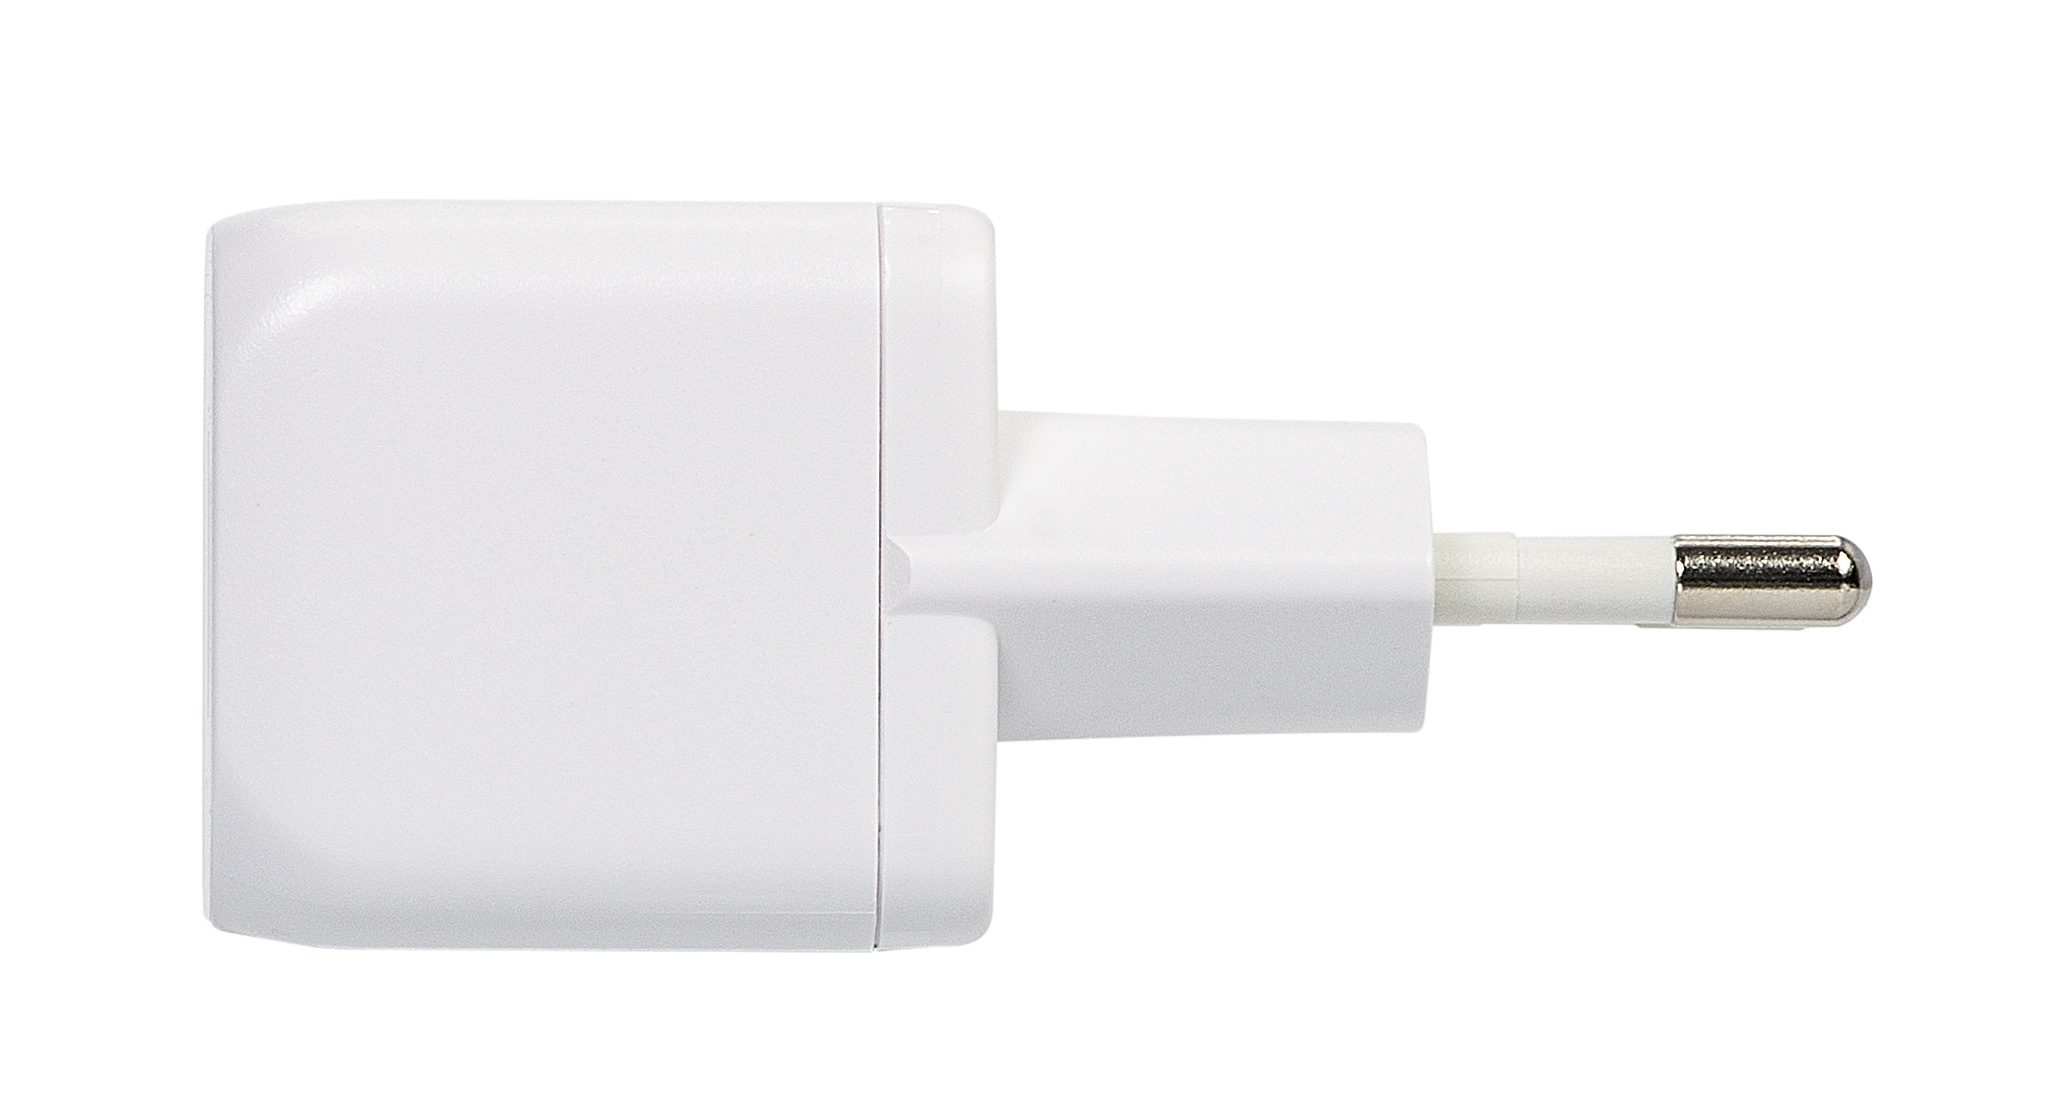 POWER CUBE 20 Powerful GaN charging plug in pocket size